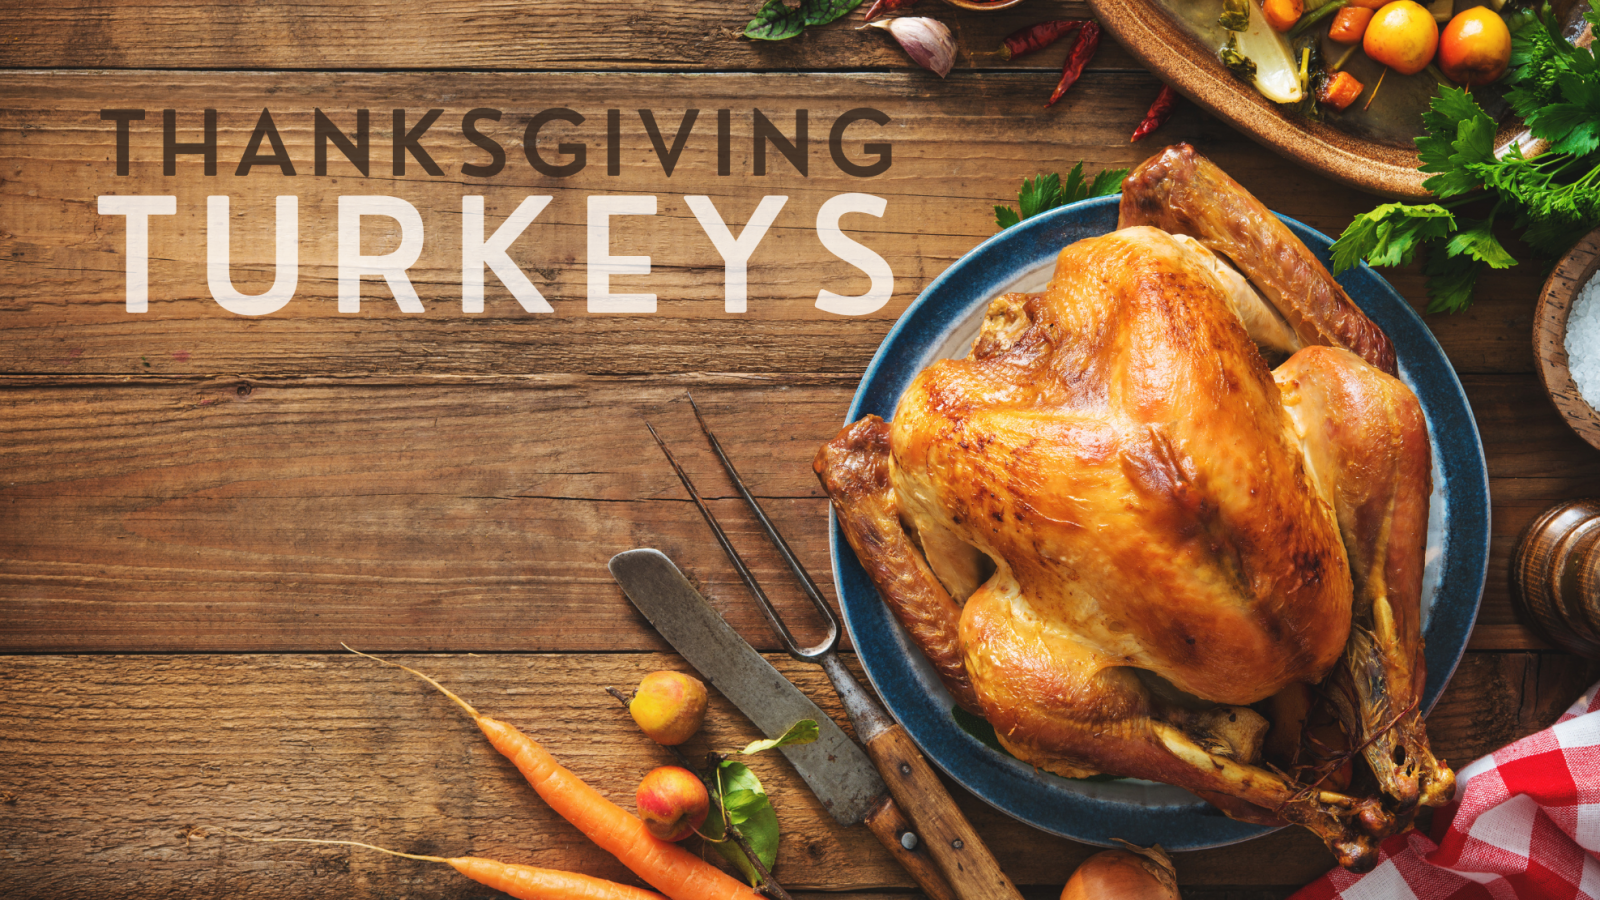 Text says: Thanksgiving Turkeys